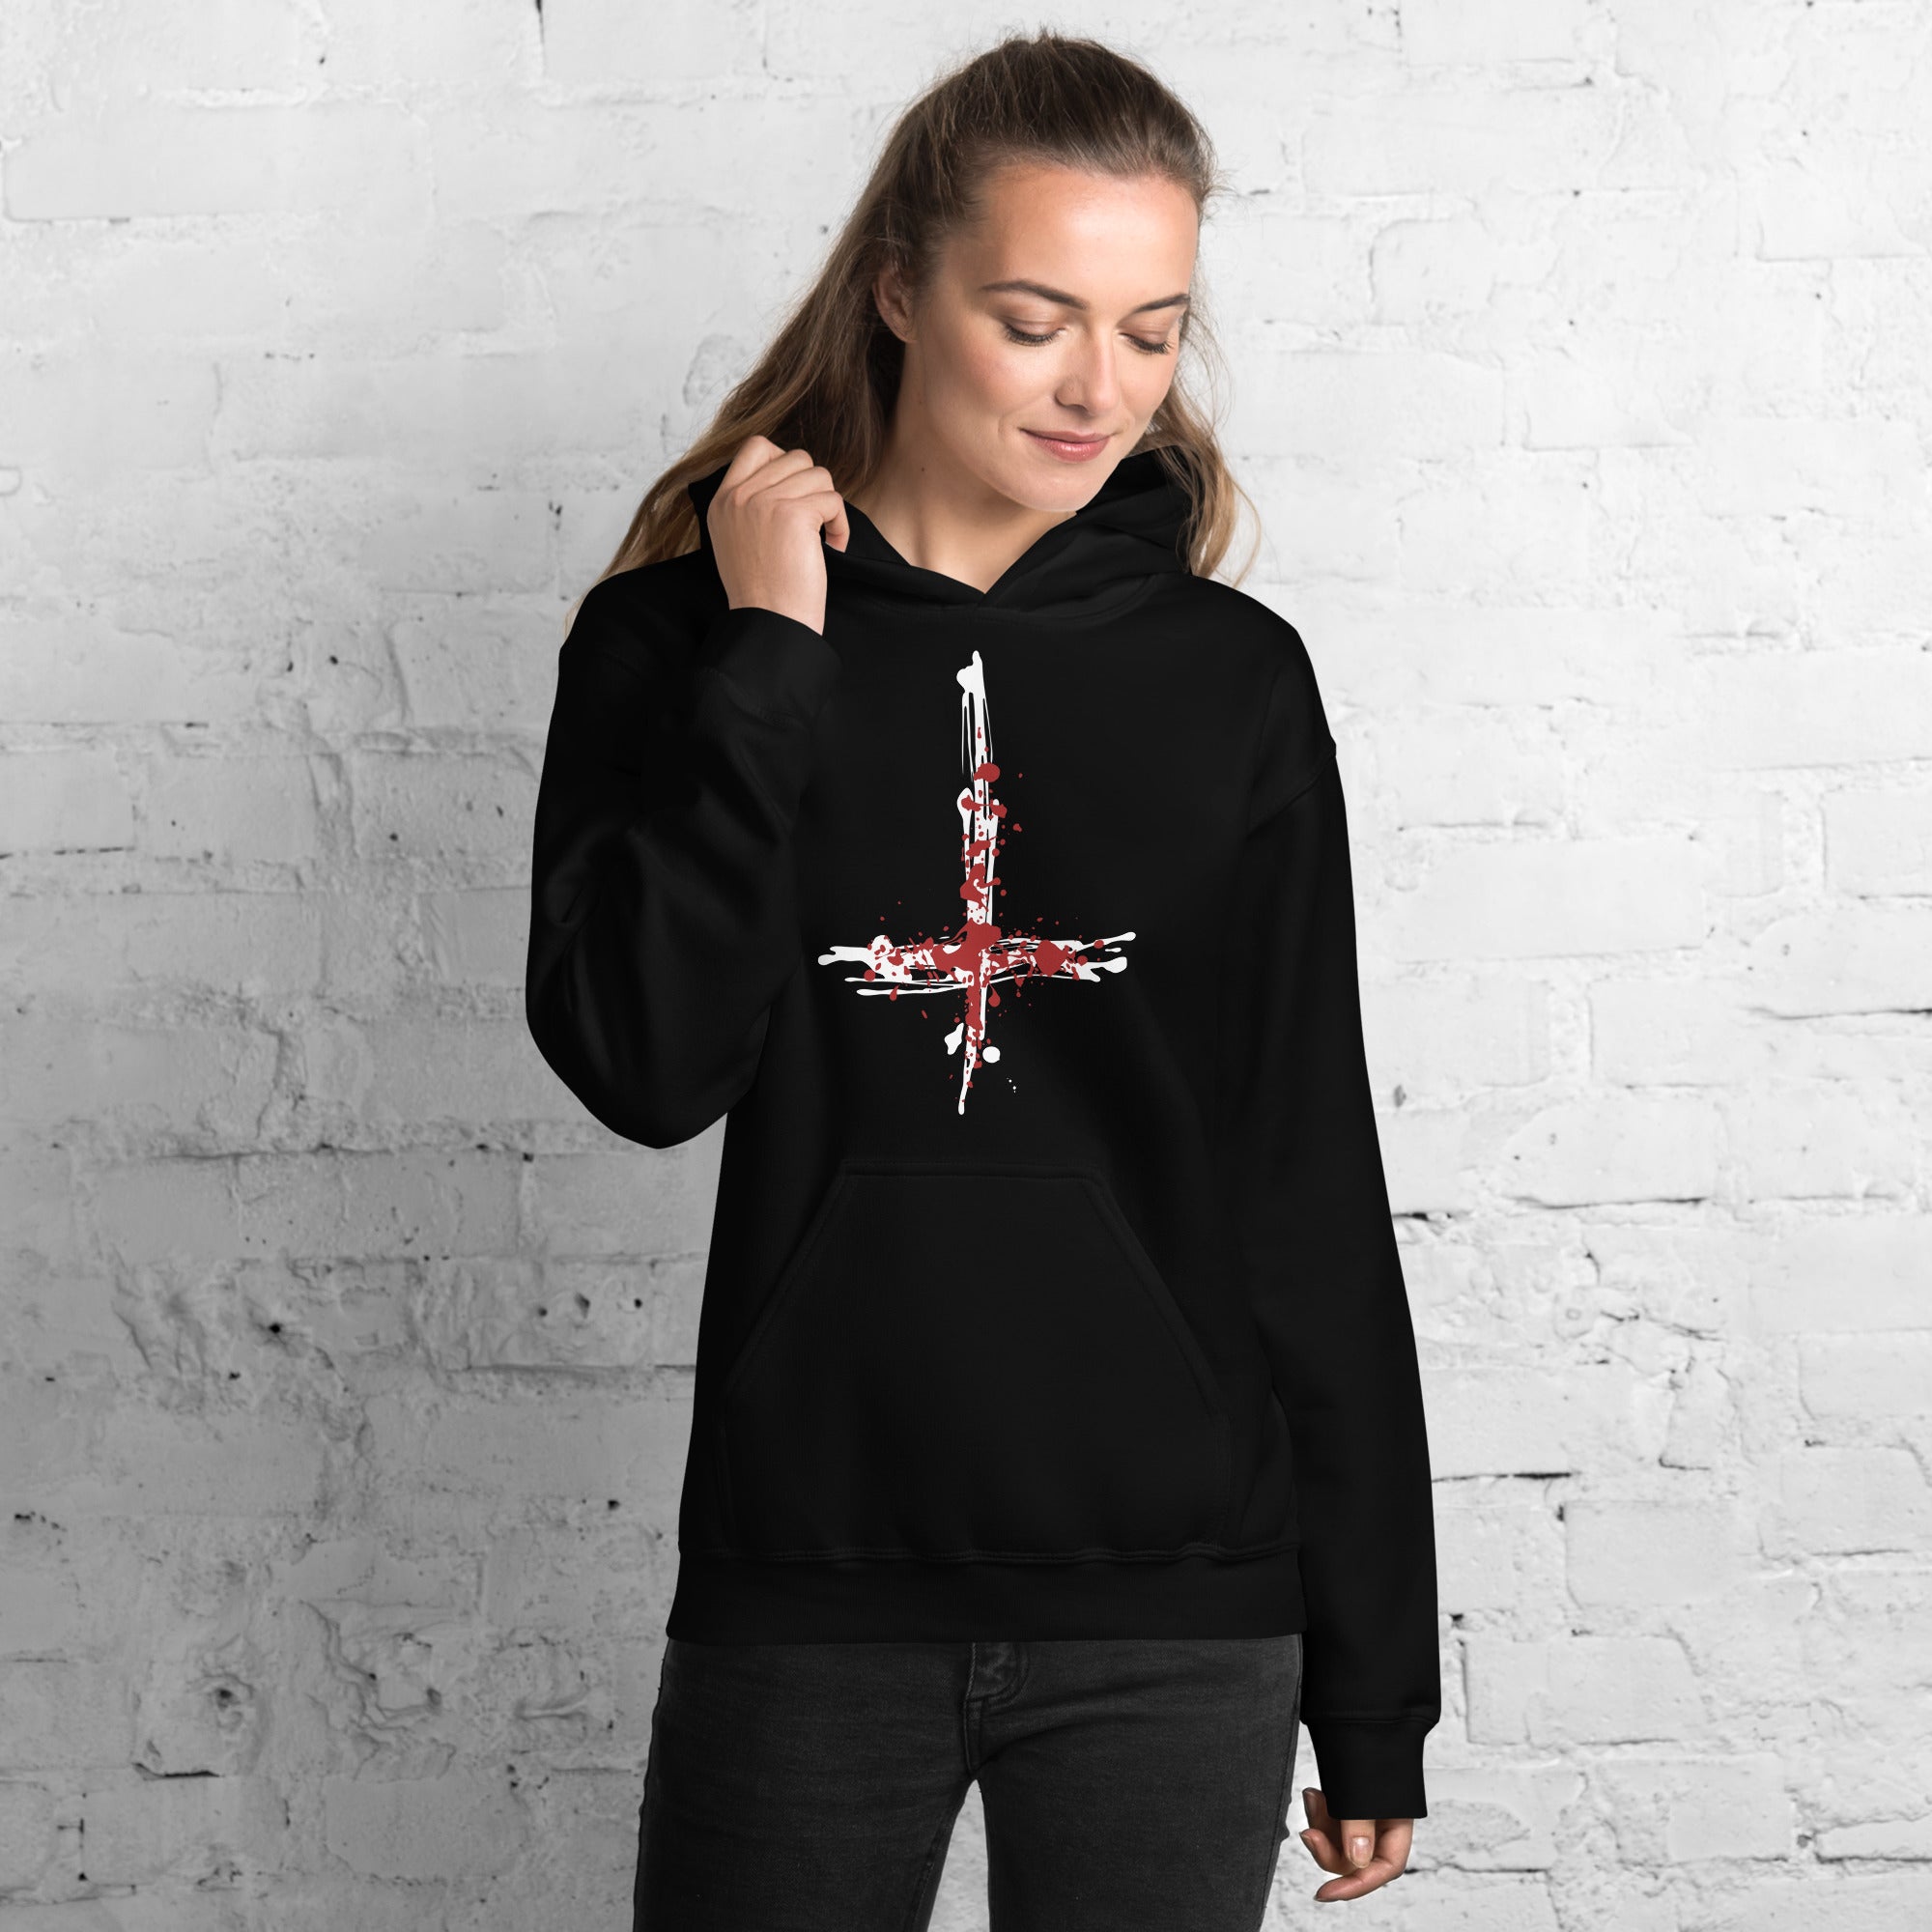 Inverted Cross Blood of Christ Unisex Hoodie Sweatshirt - Edge of Life Designs